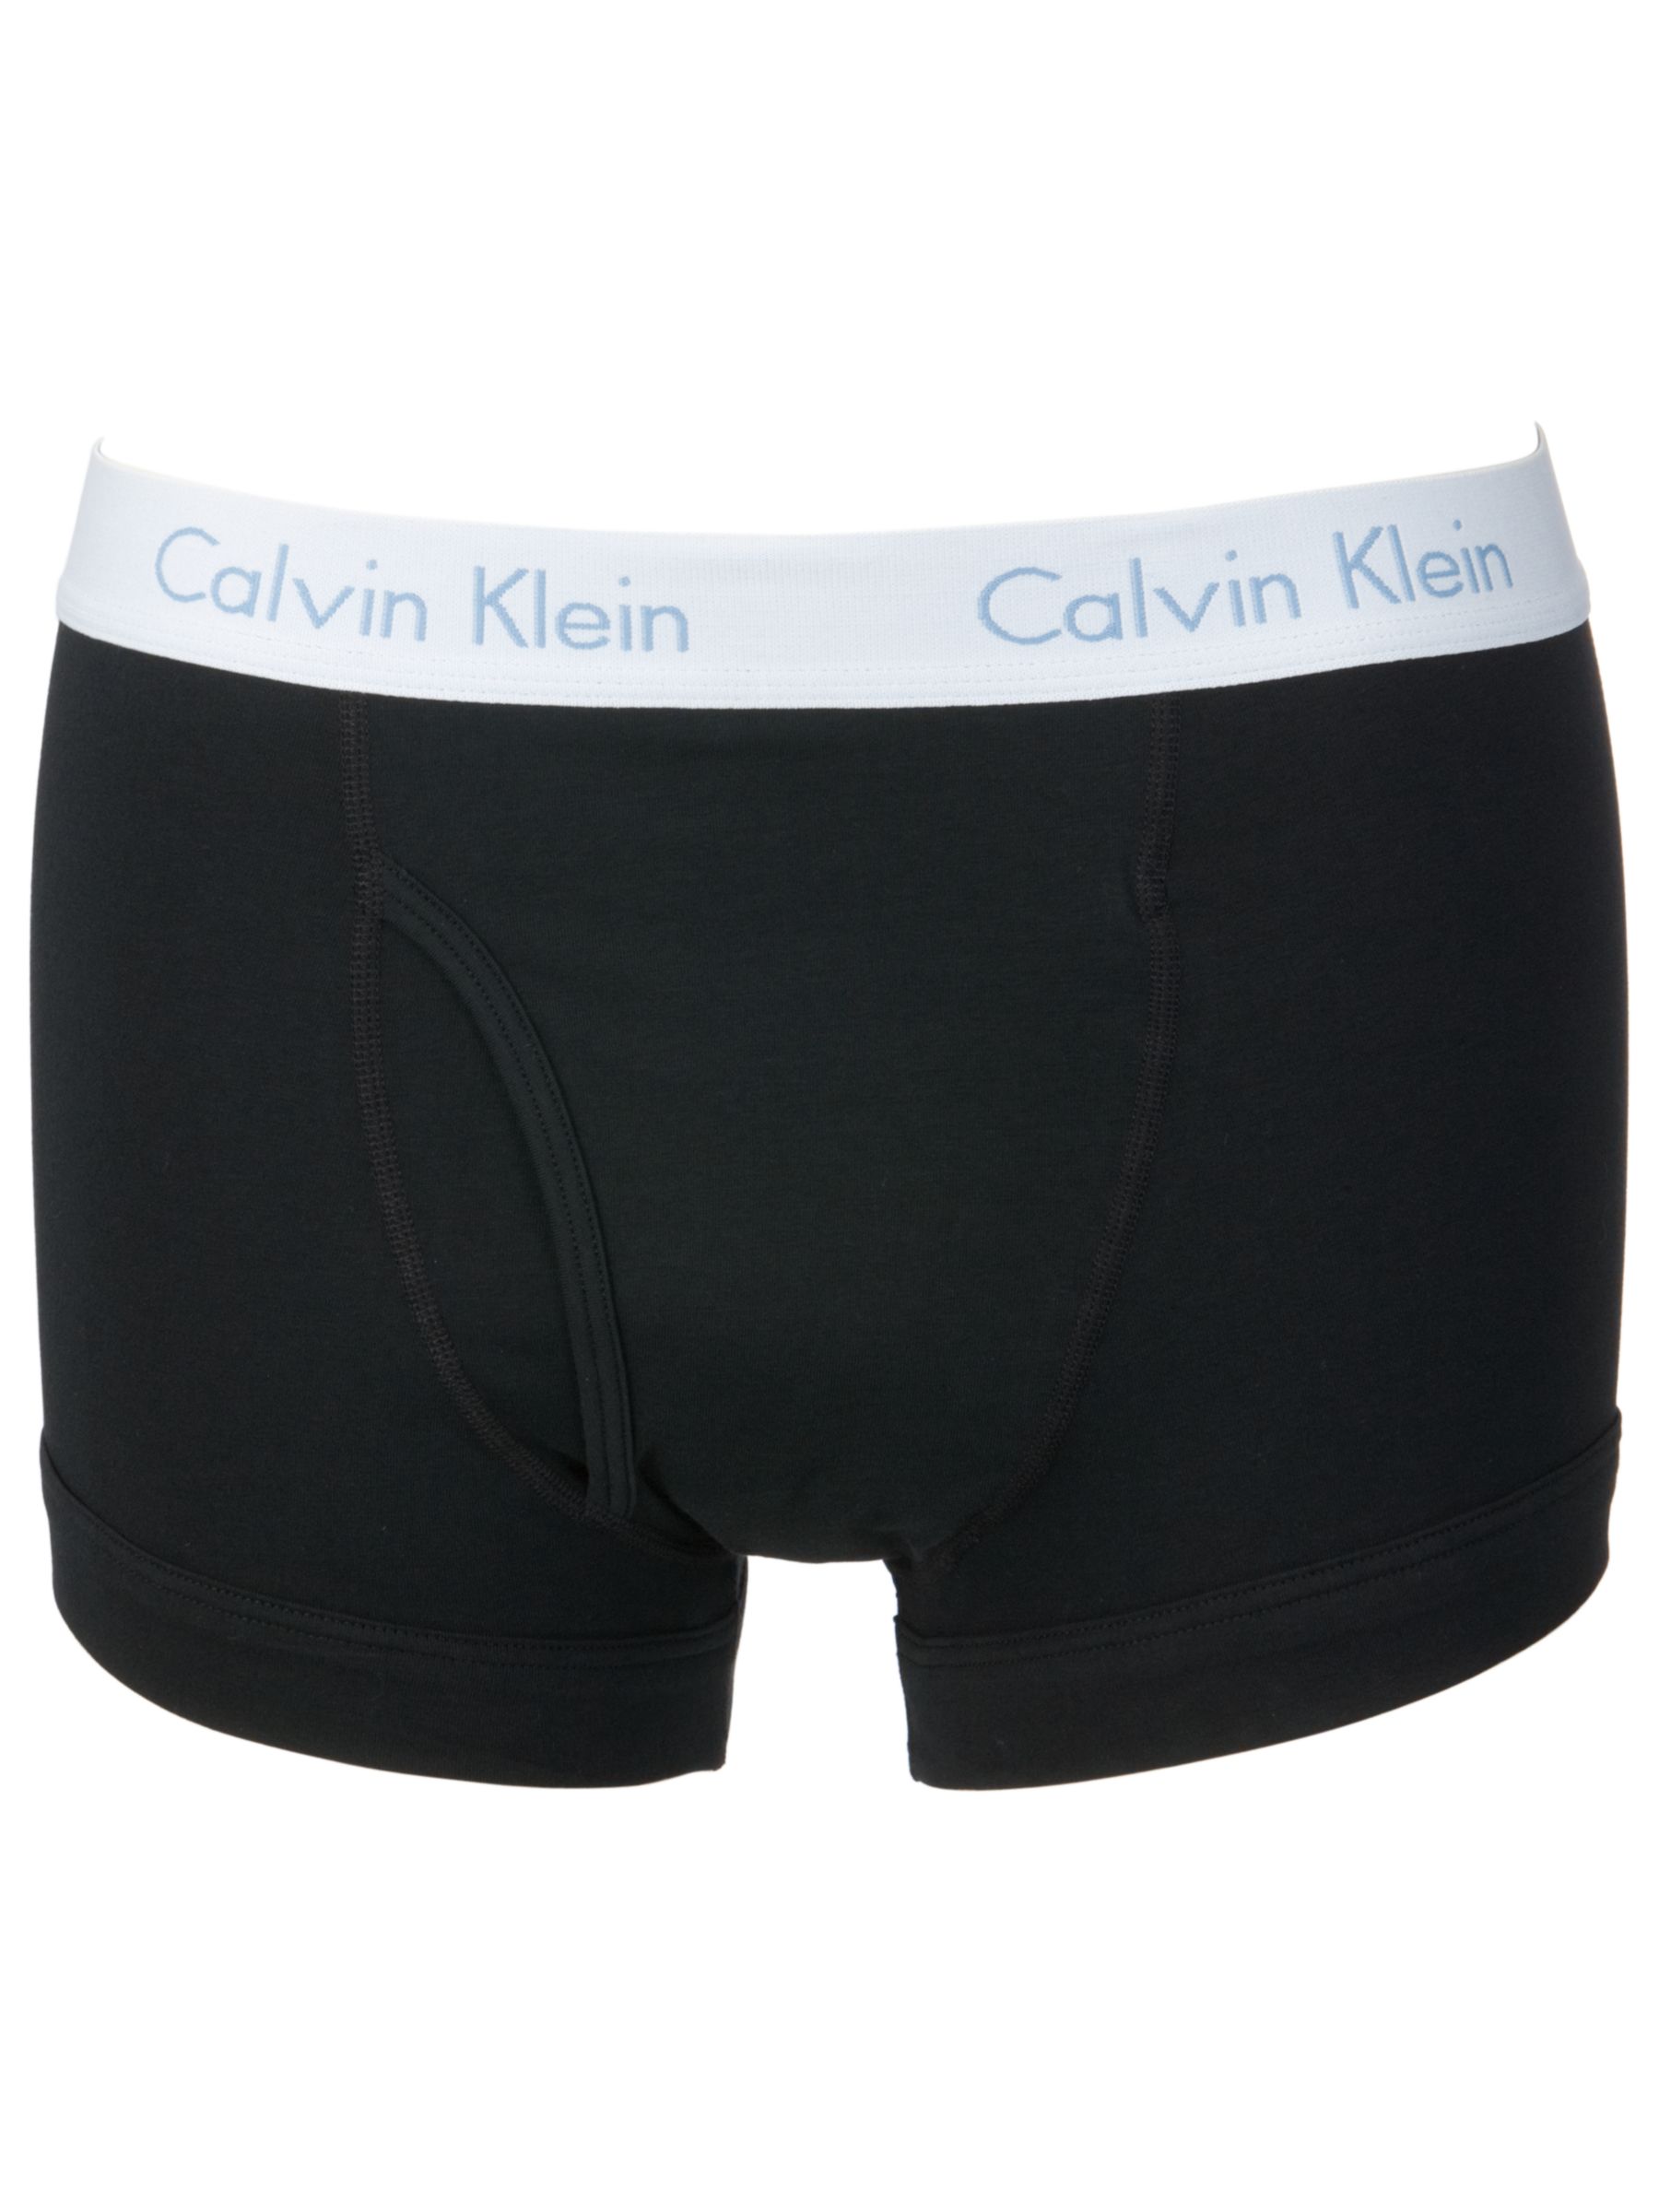 Calvin Klein Flexible Fit Trunks, Black, Large